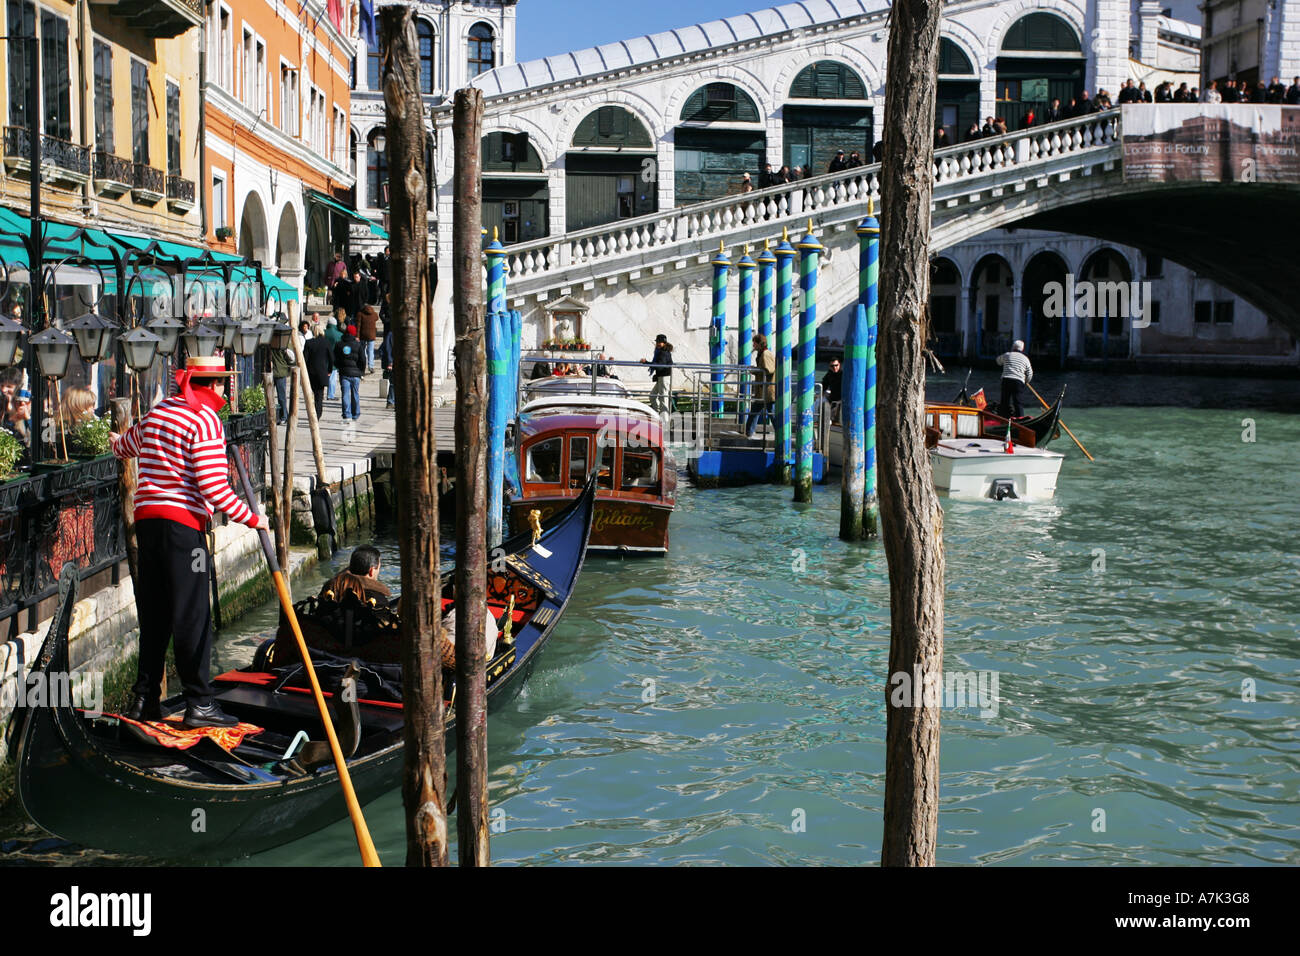 Typical Venice scene as a tourist laiden gondola departs from a cafe near the famous Rialto Bridge Venice Italy Europe EU Stock Photo